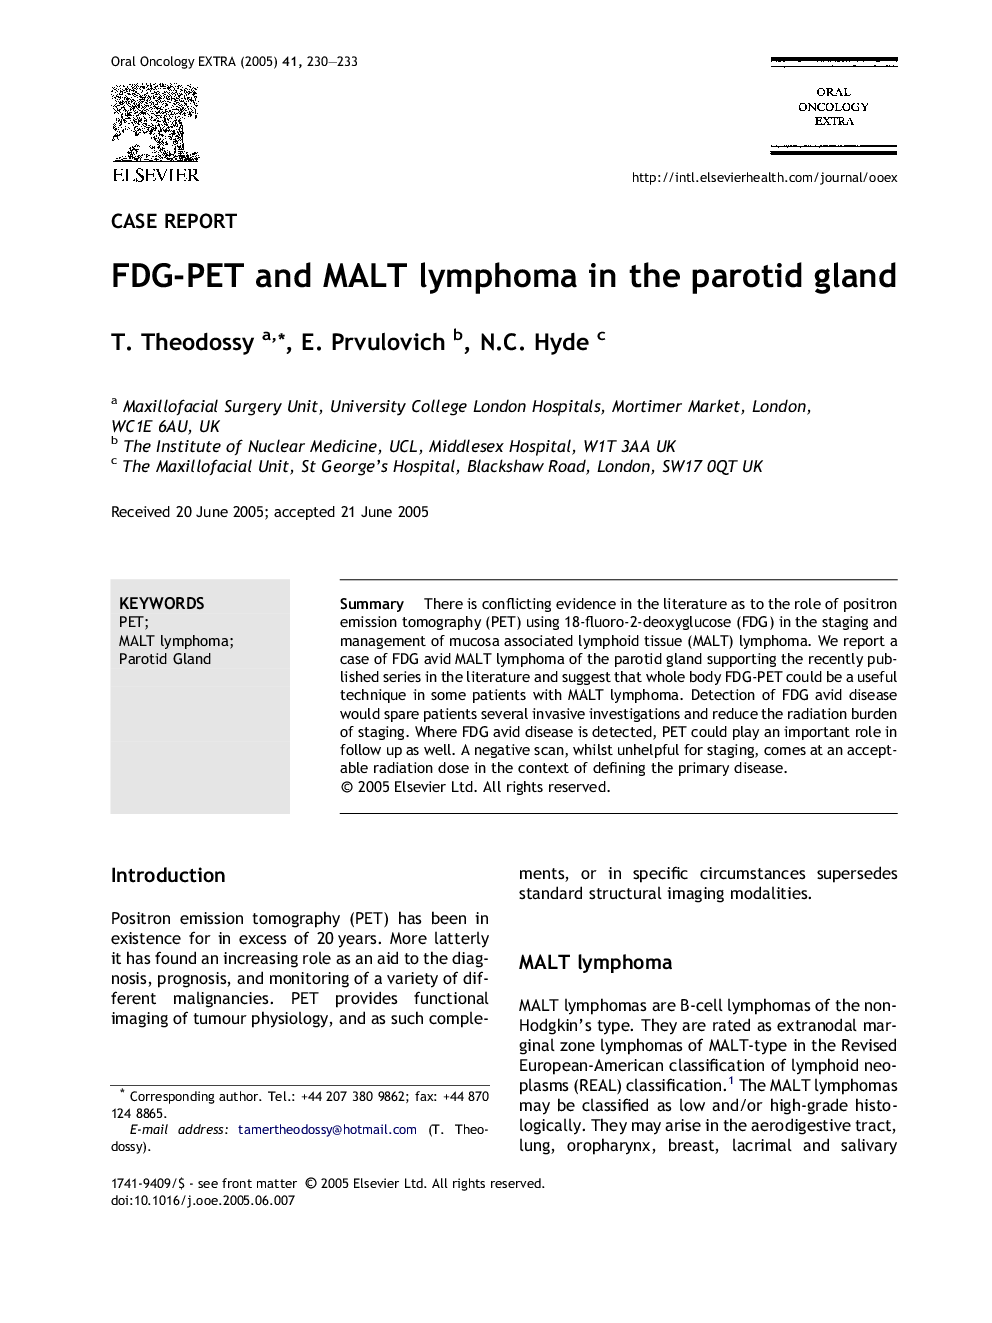 FDG-PET and MALT lymphoma in the parotid gland